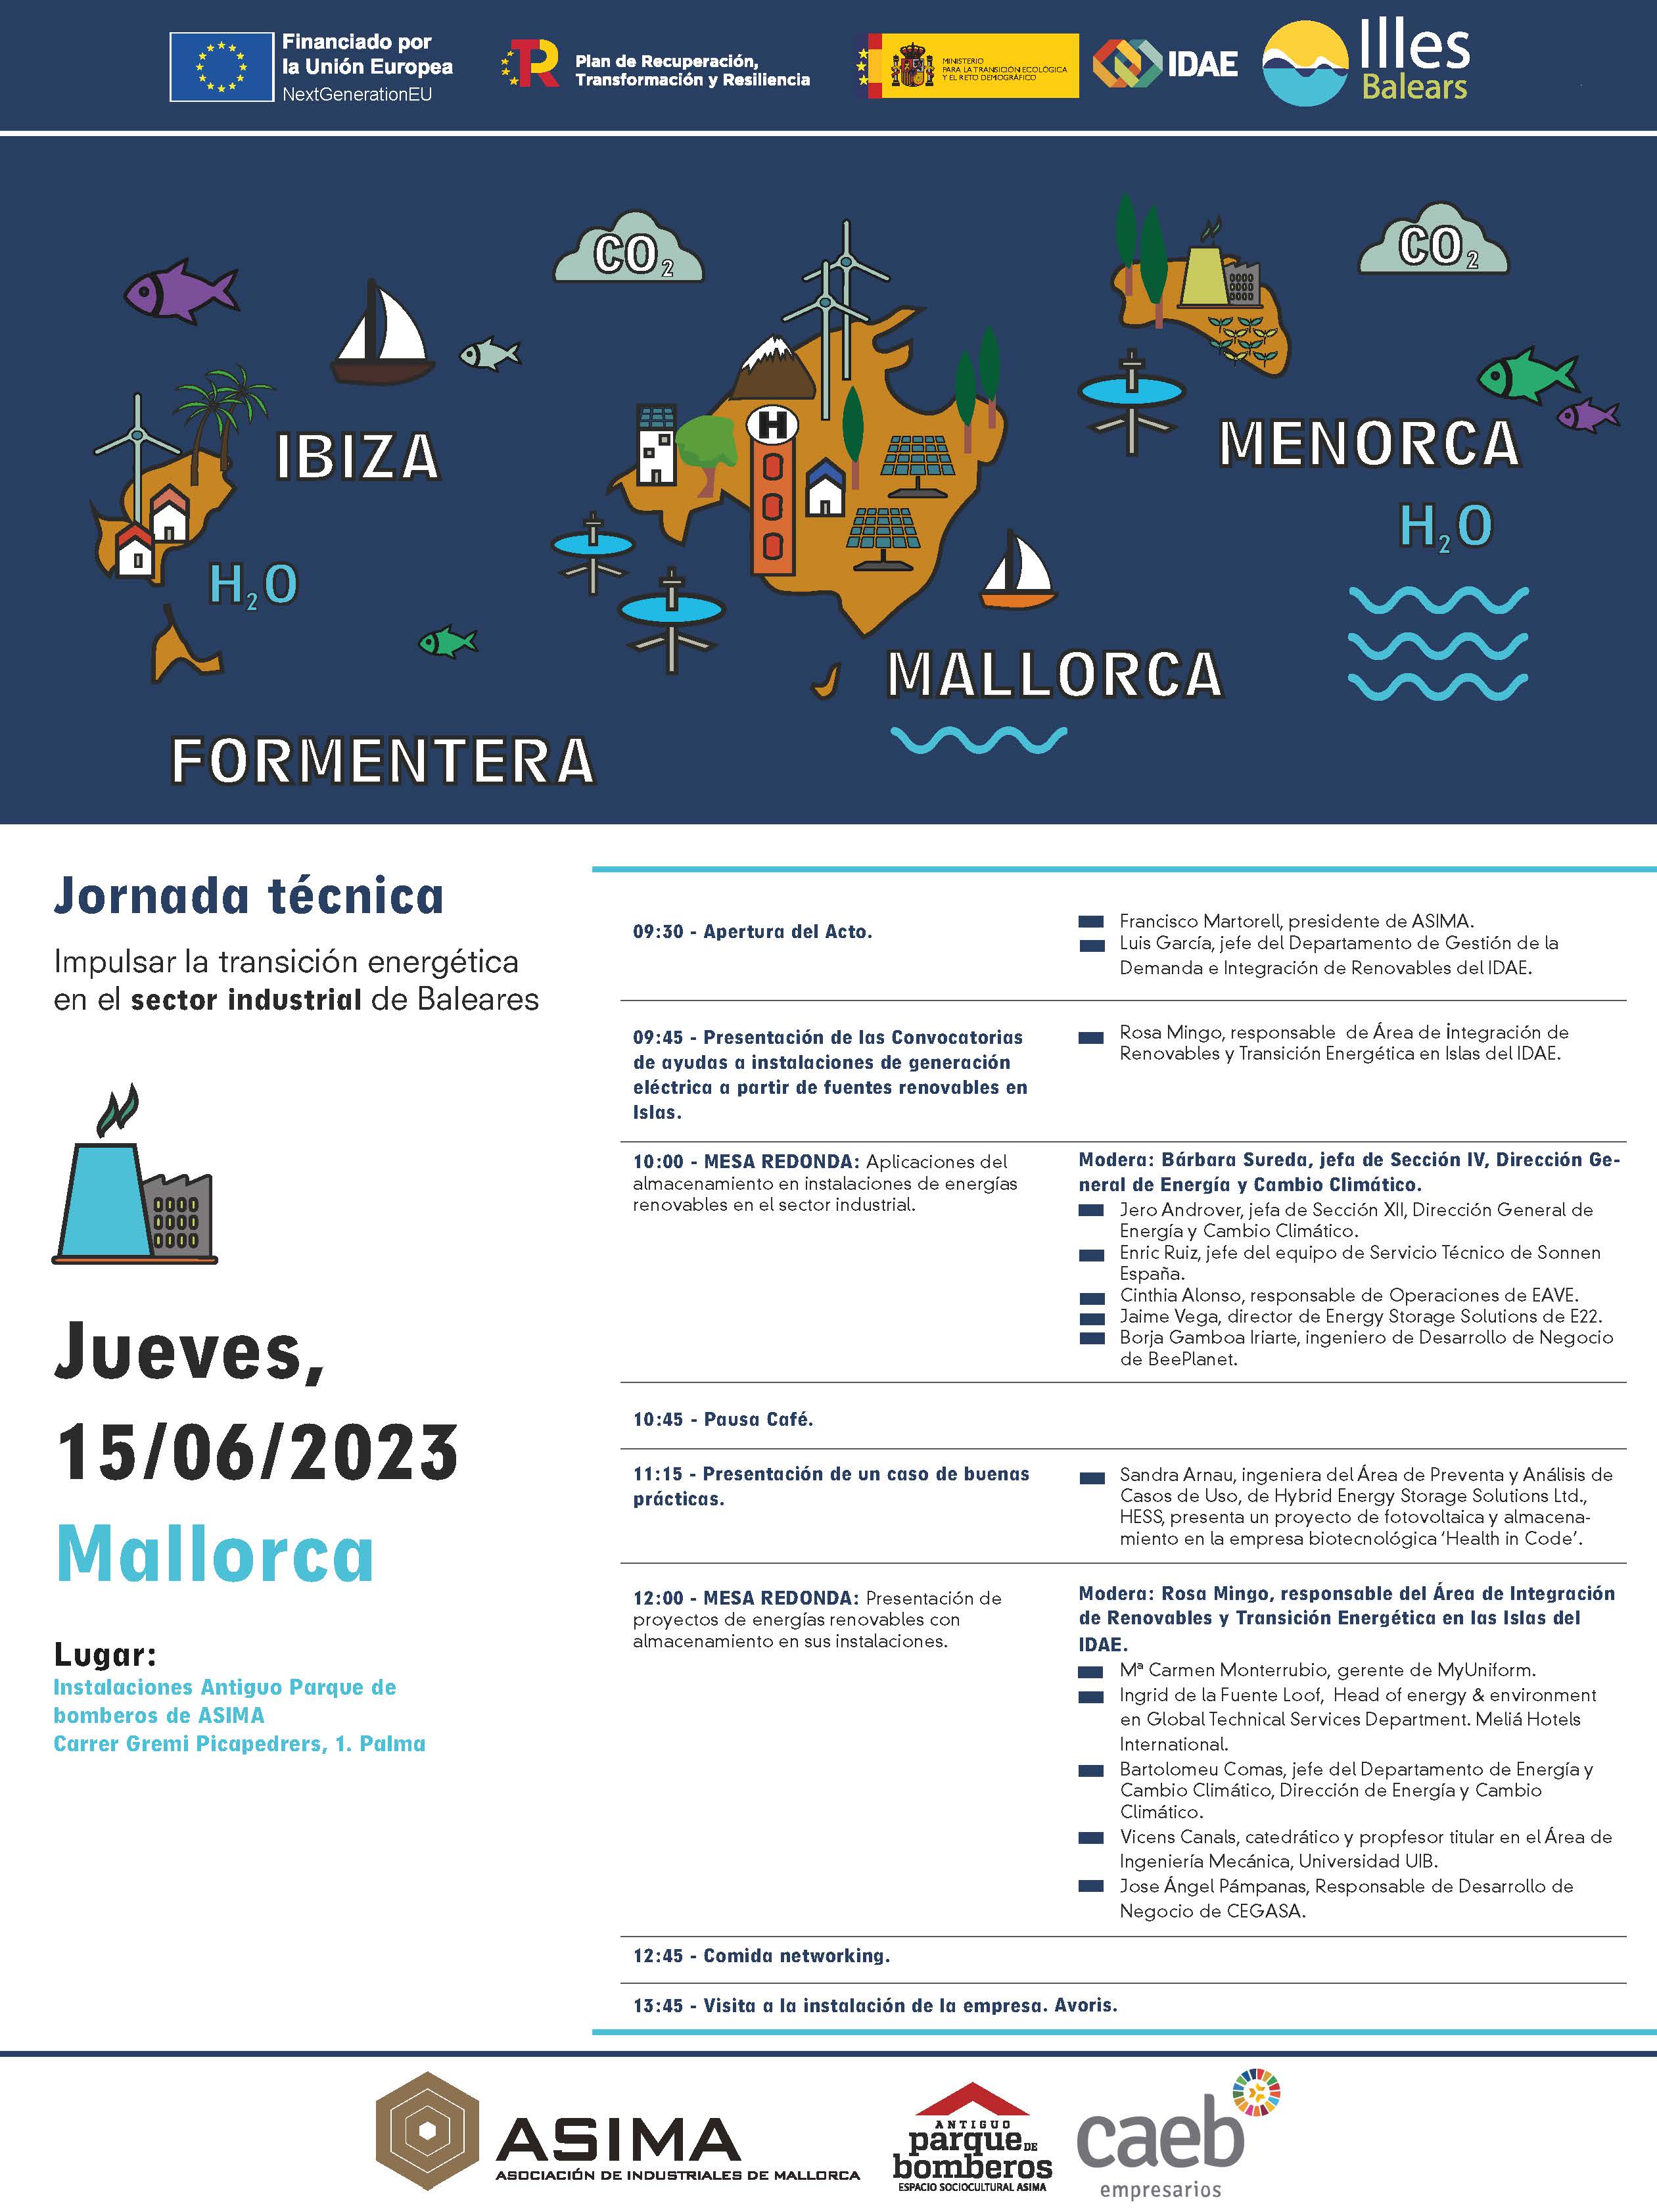 Jornada técnica "Impulsar la transición energética en el sector industrial de Baleares"